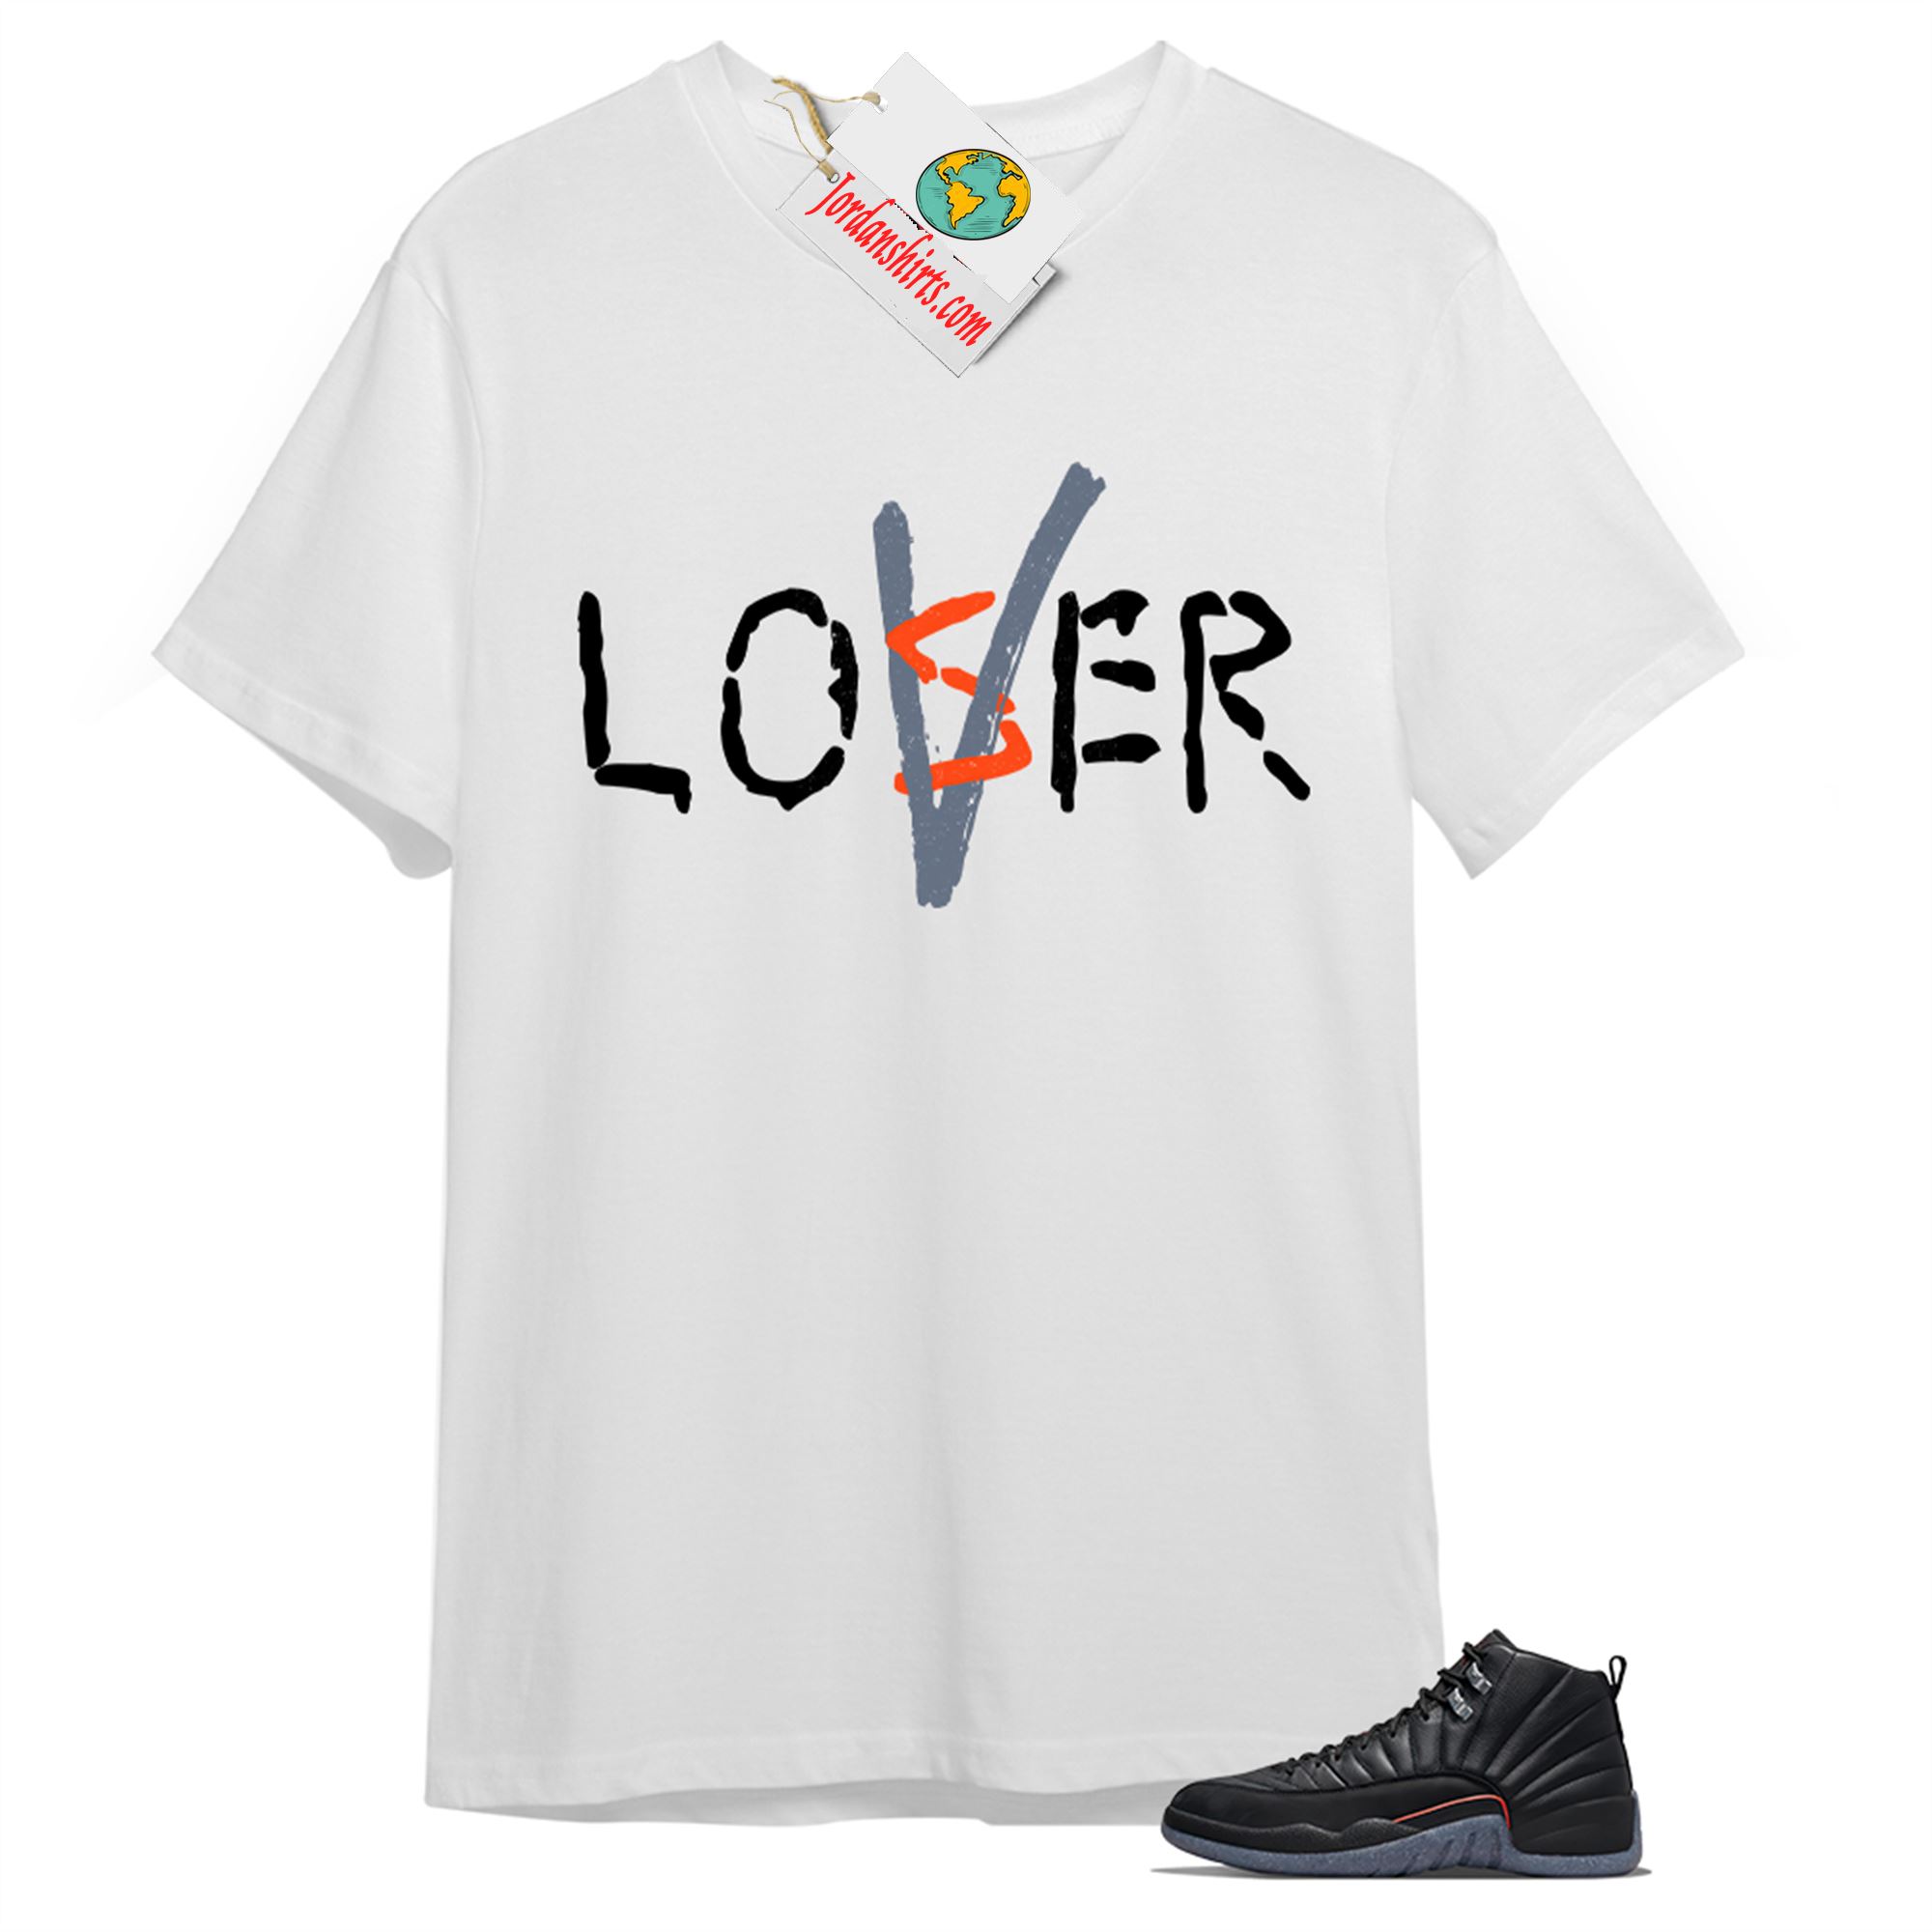 Jordan 12 Shirt, Love A Loser White T-shirt Air Jordan 12 Utility Grind 12s Plus Size Up To 5xl